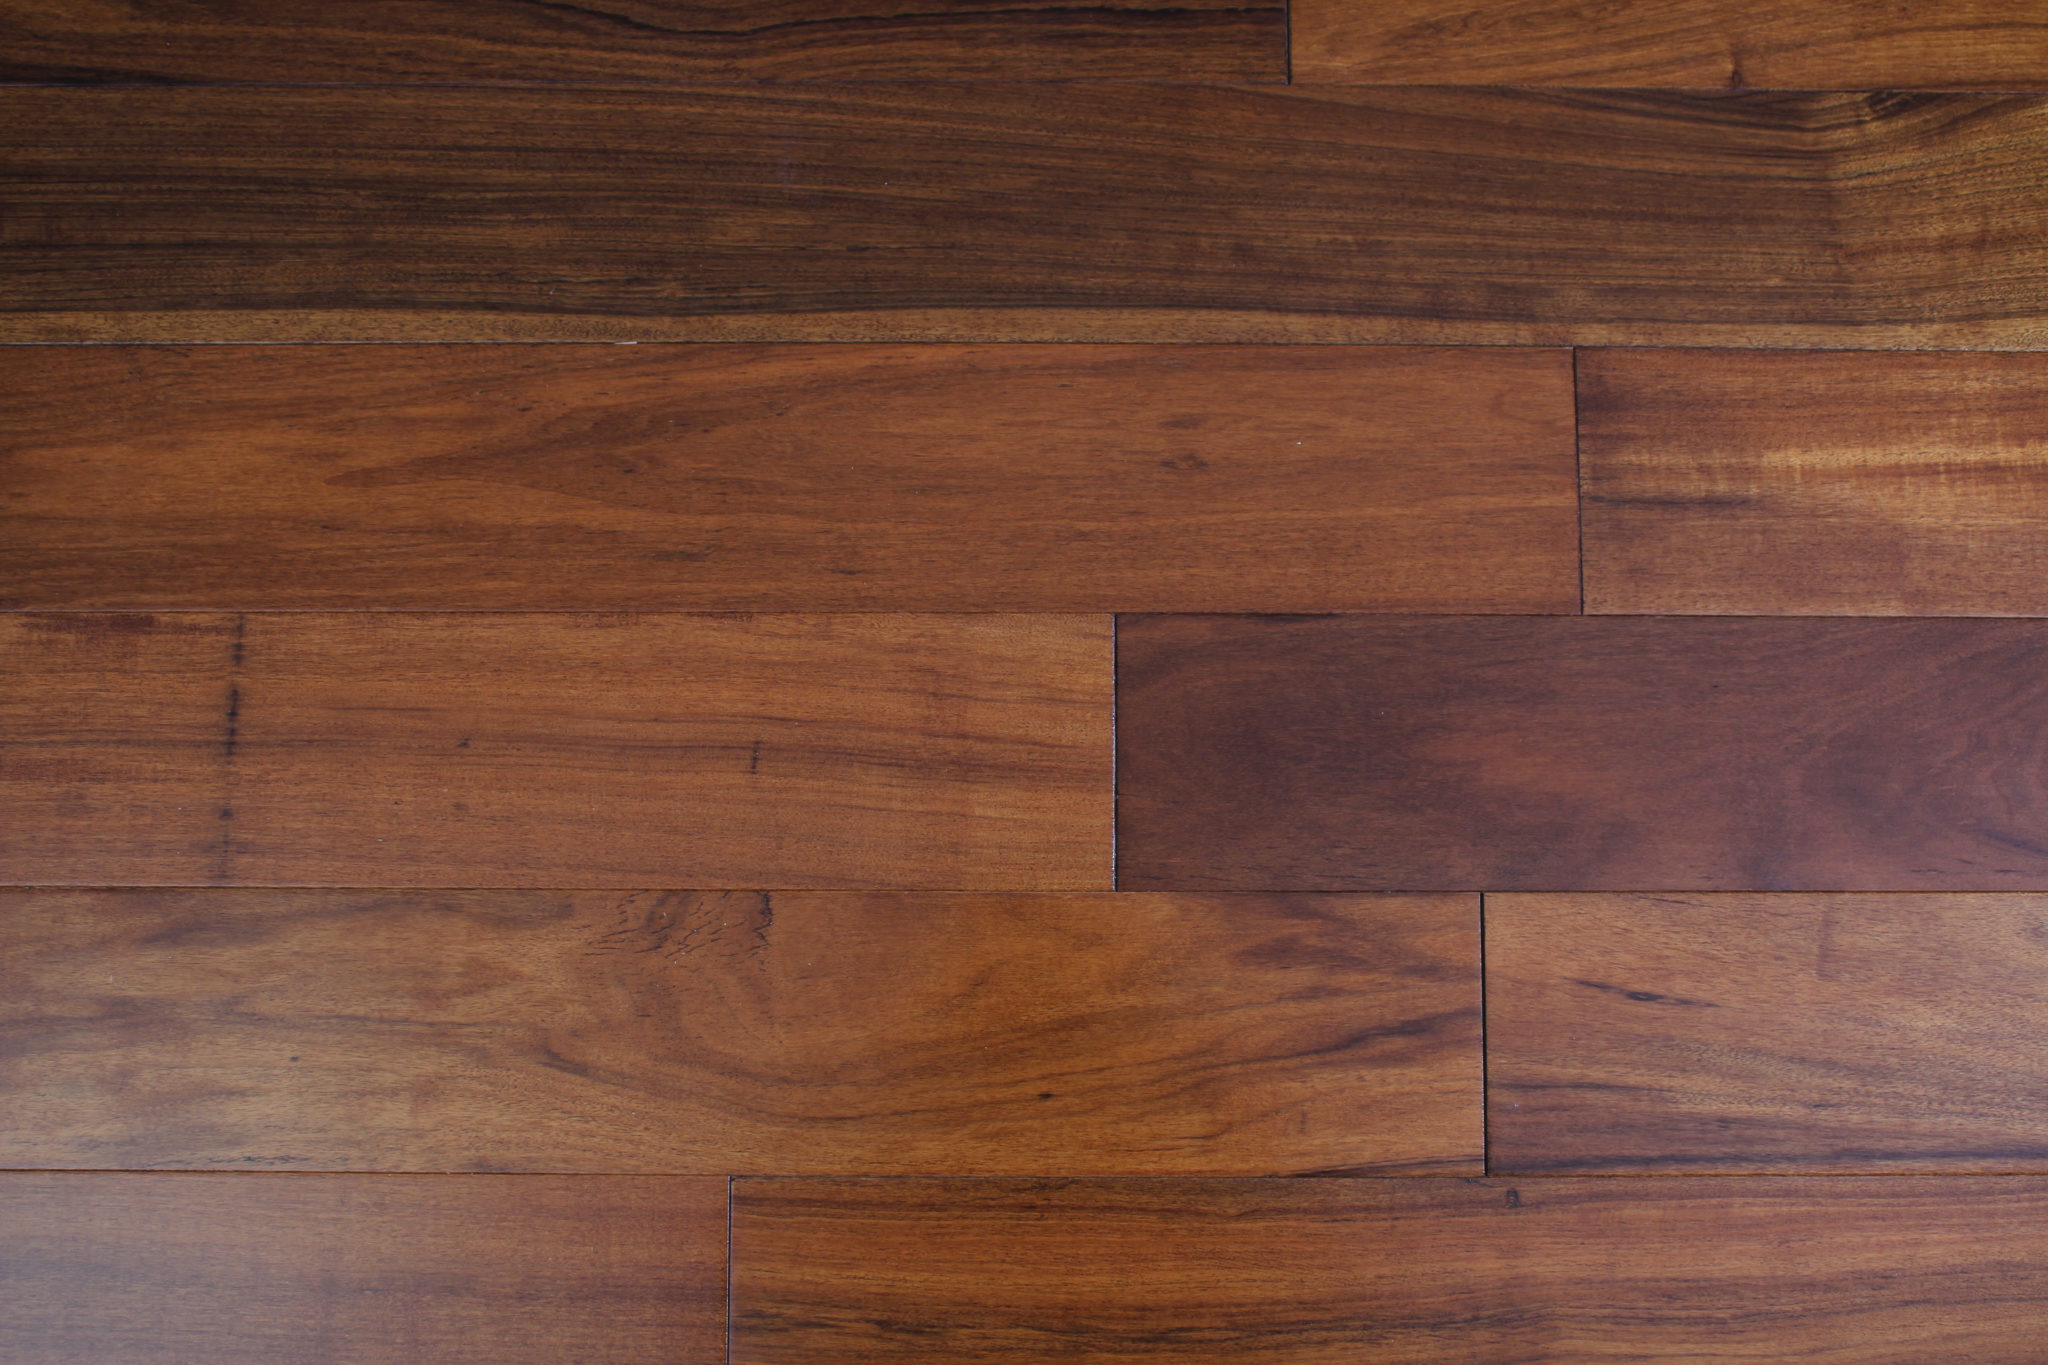 Wood Floors Engineered Hardwood, Hardwood Floors Repair Santa Barbara California